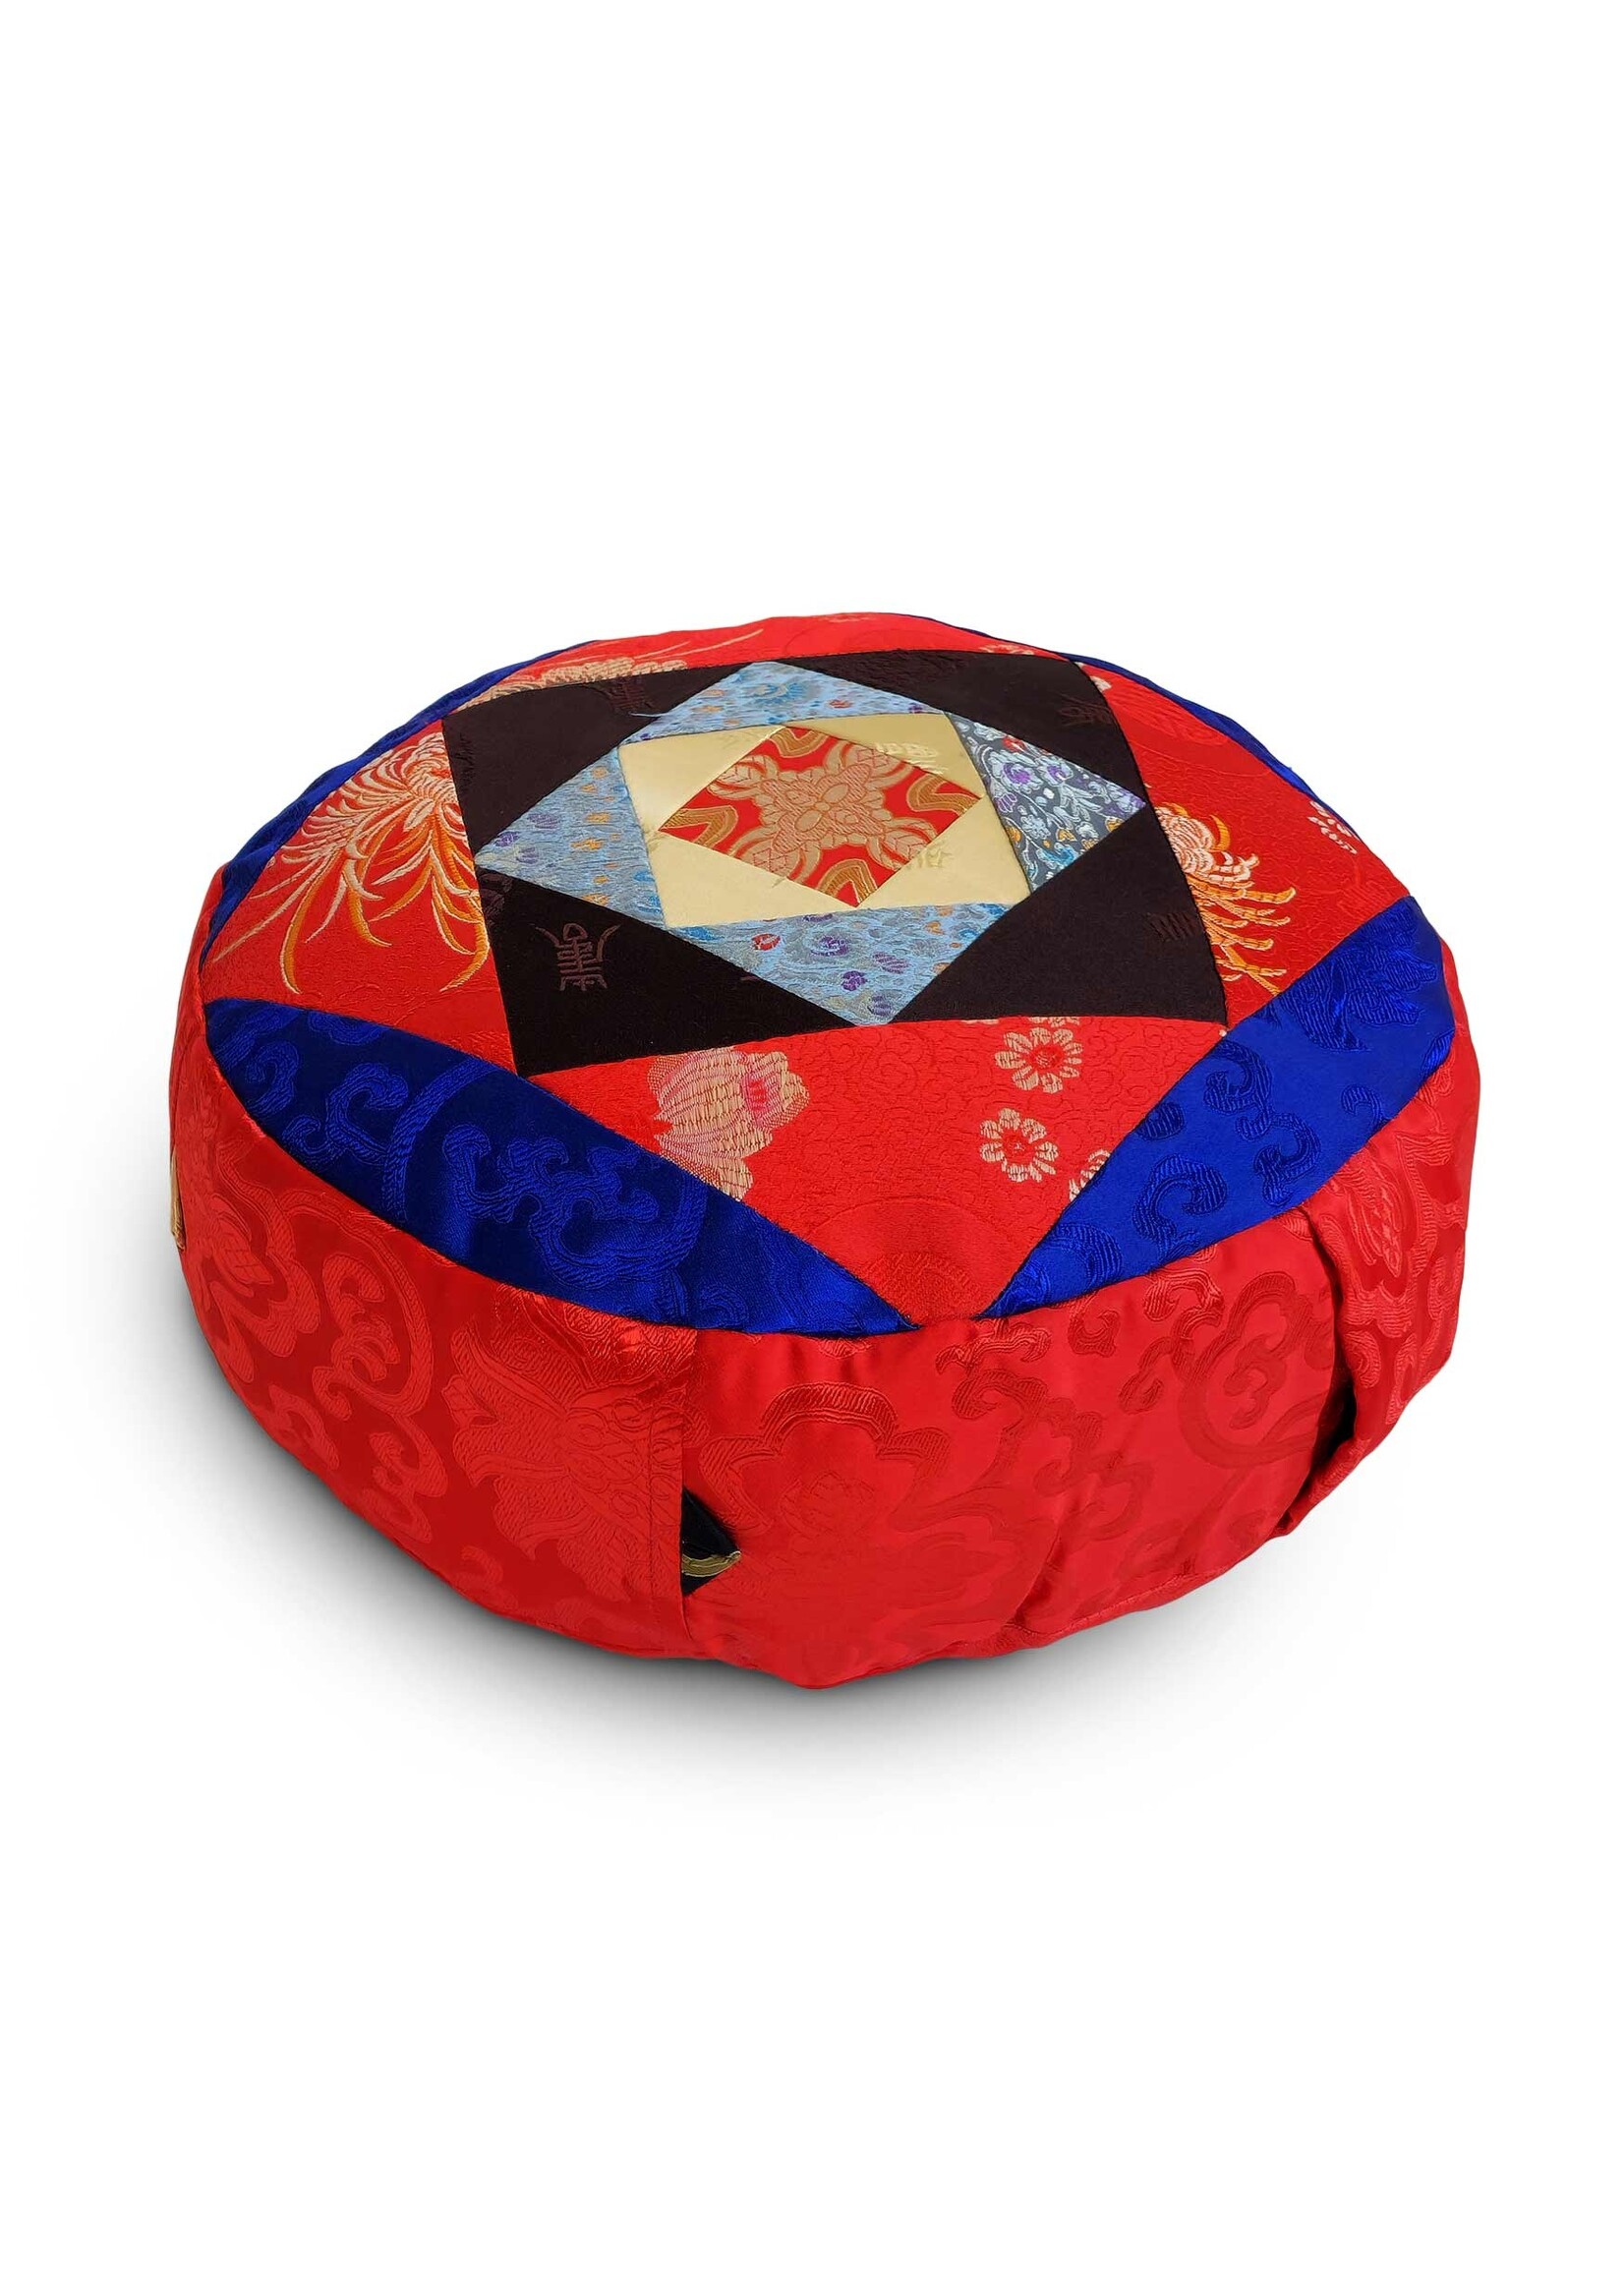 Tibetan Zafu Meditation Cushion, Made of Silk Brocade with Kapok Filling, red